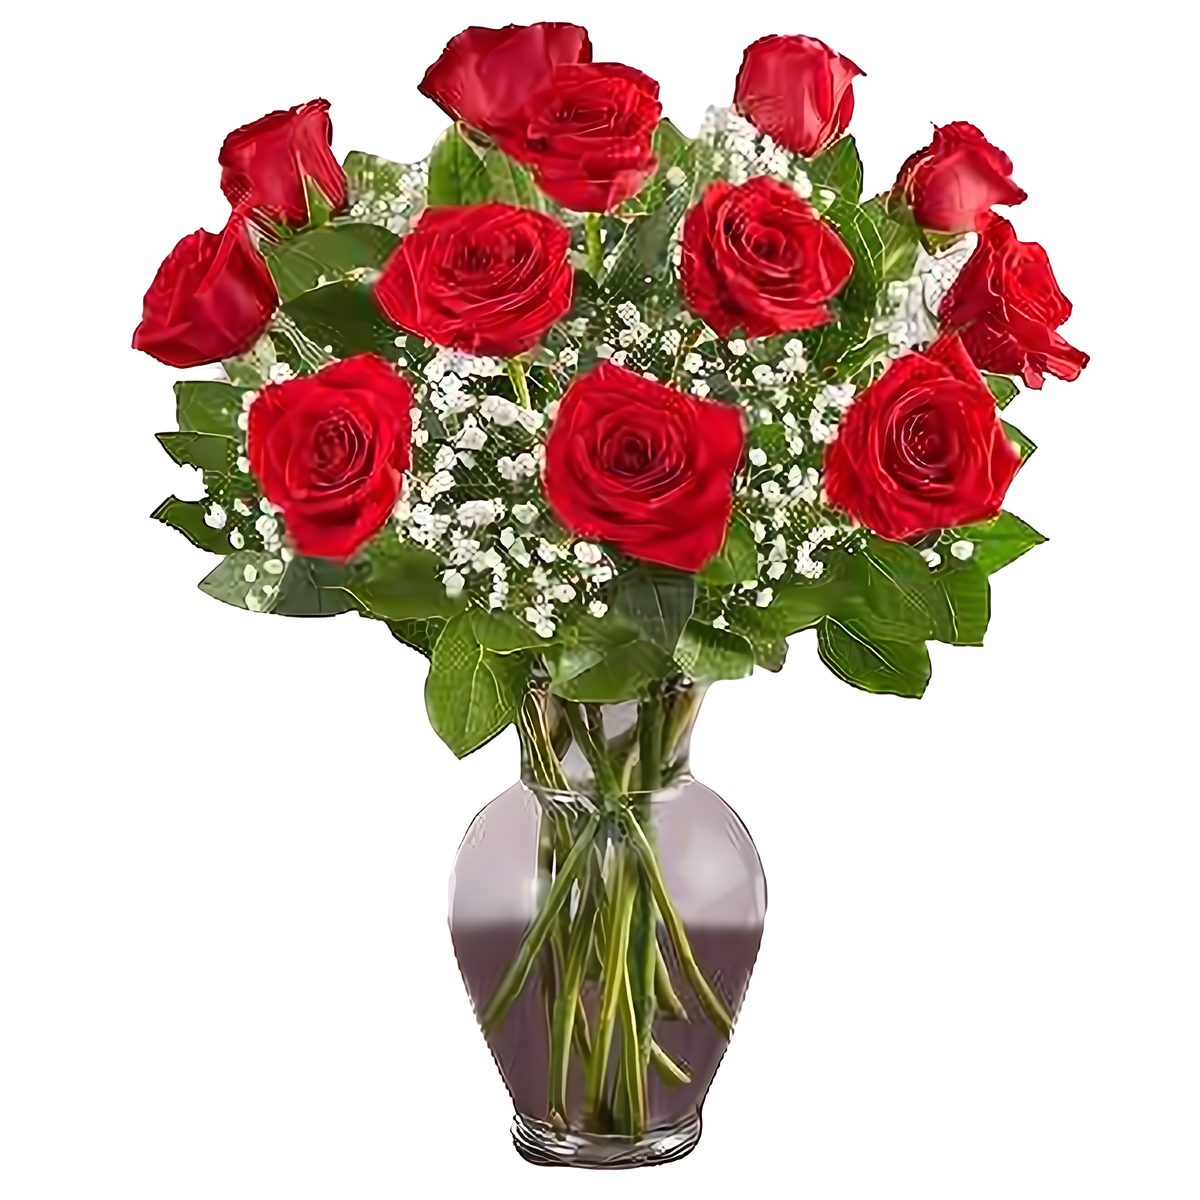 Queens Flower Delivery - Premium Dozen Long Stem Red Roses